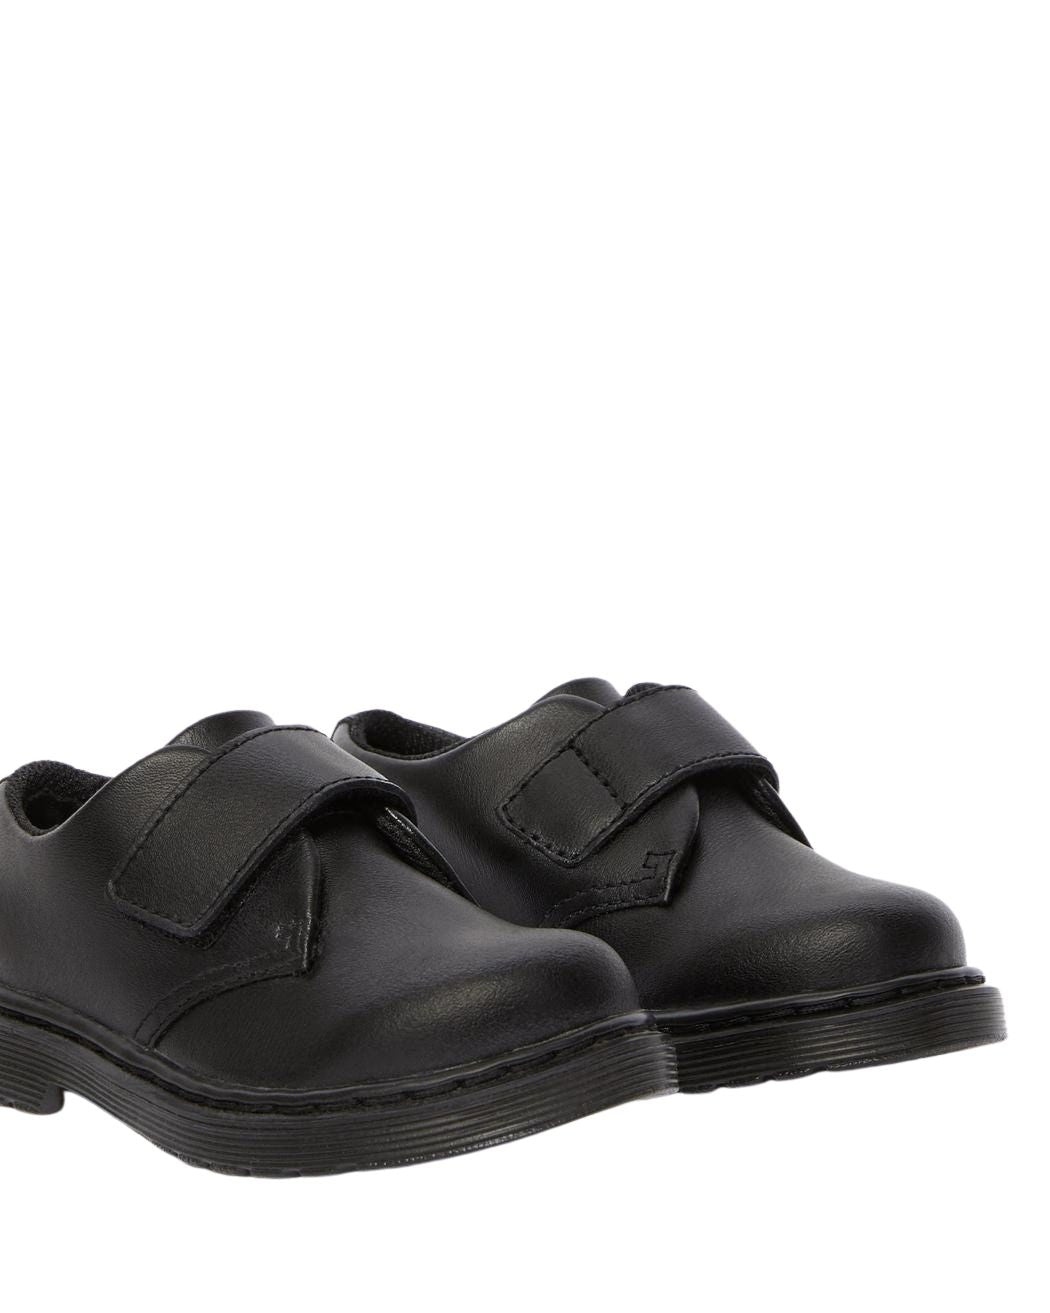 Dr. Martens Kamron Toddler Leather Rip Tape Shoes - Black